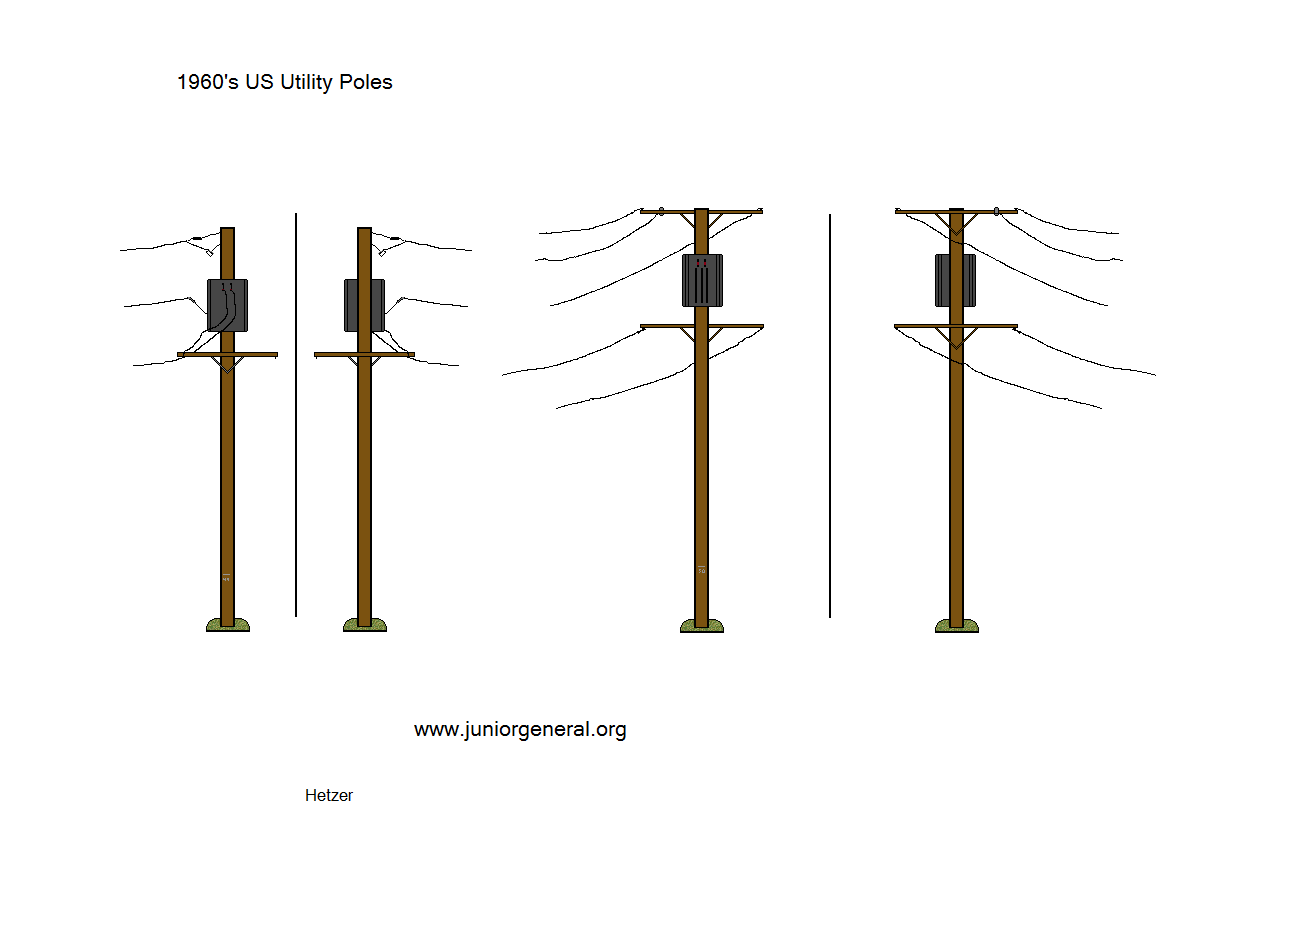 US Utility Poles (1960's)